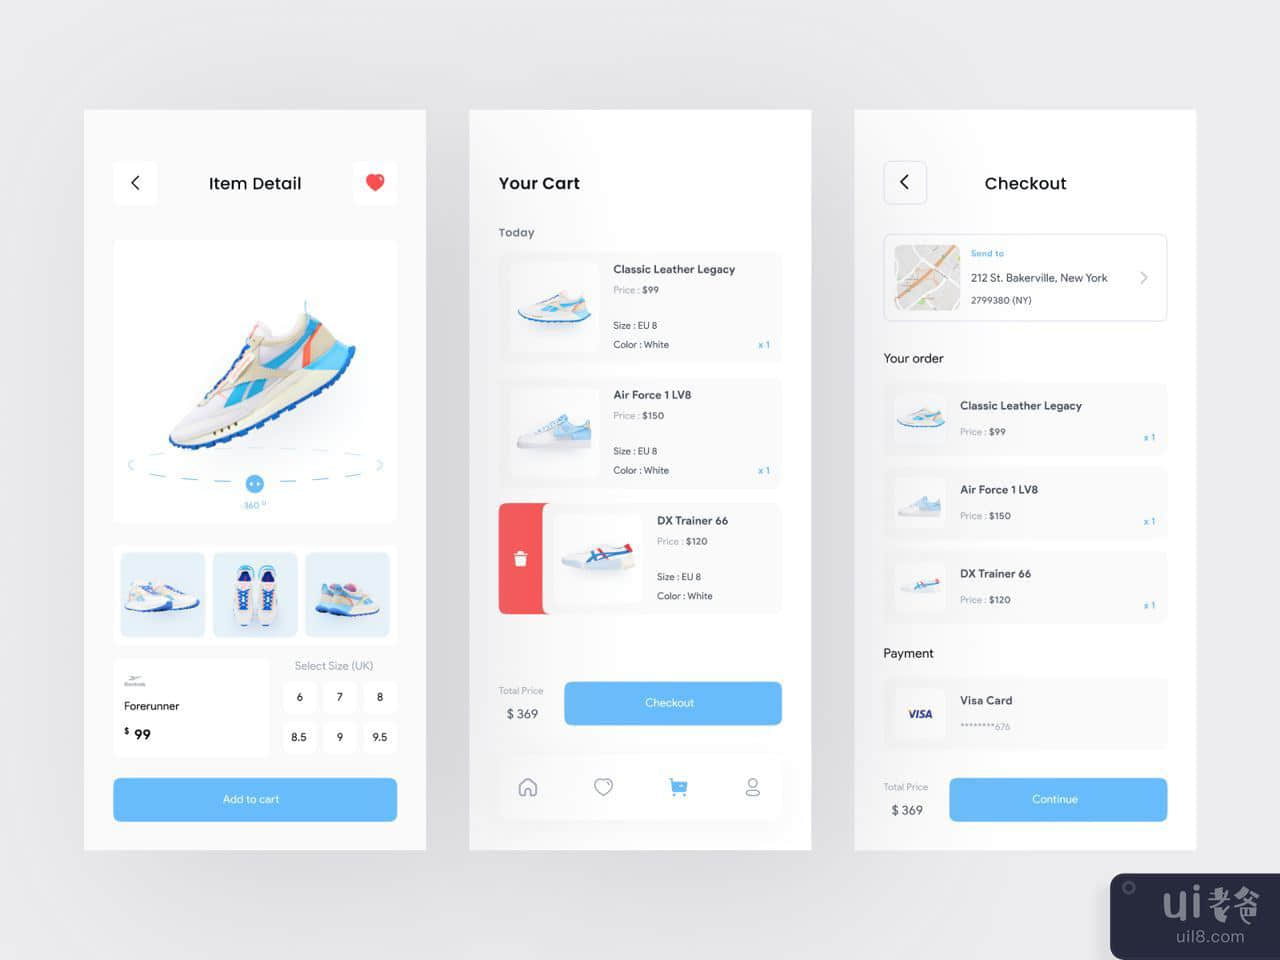 Spatu - 鞋市移动应用程序(Spatu - Shoe Market Mobile App)插图